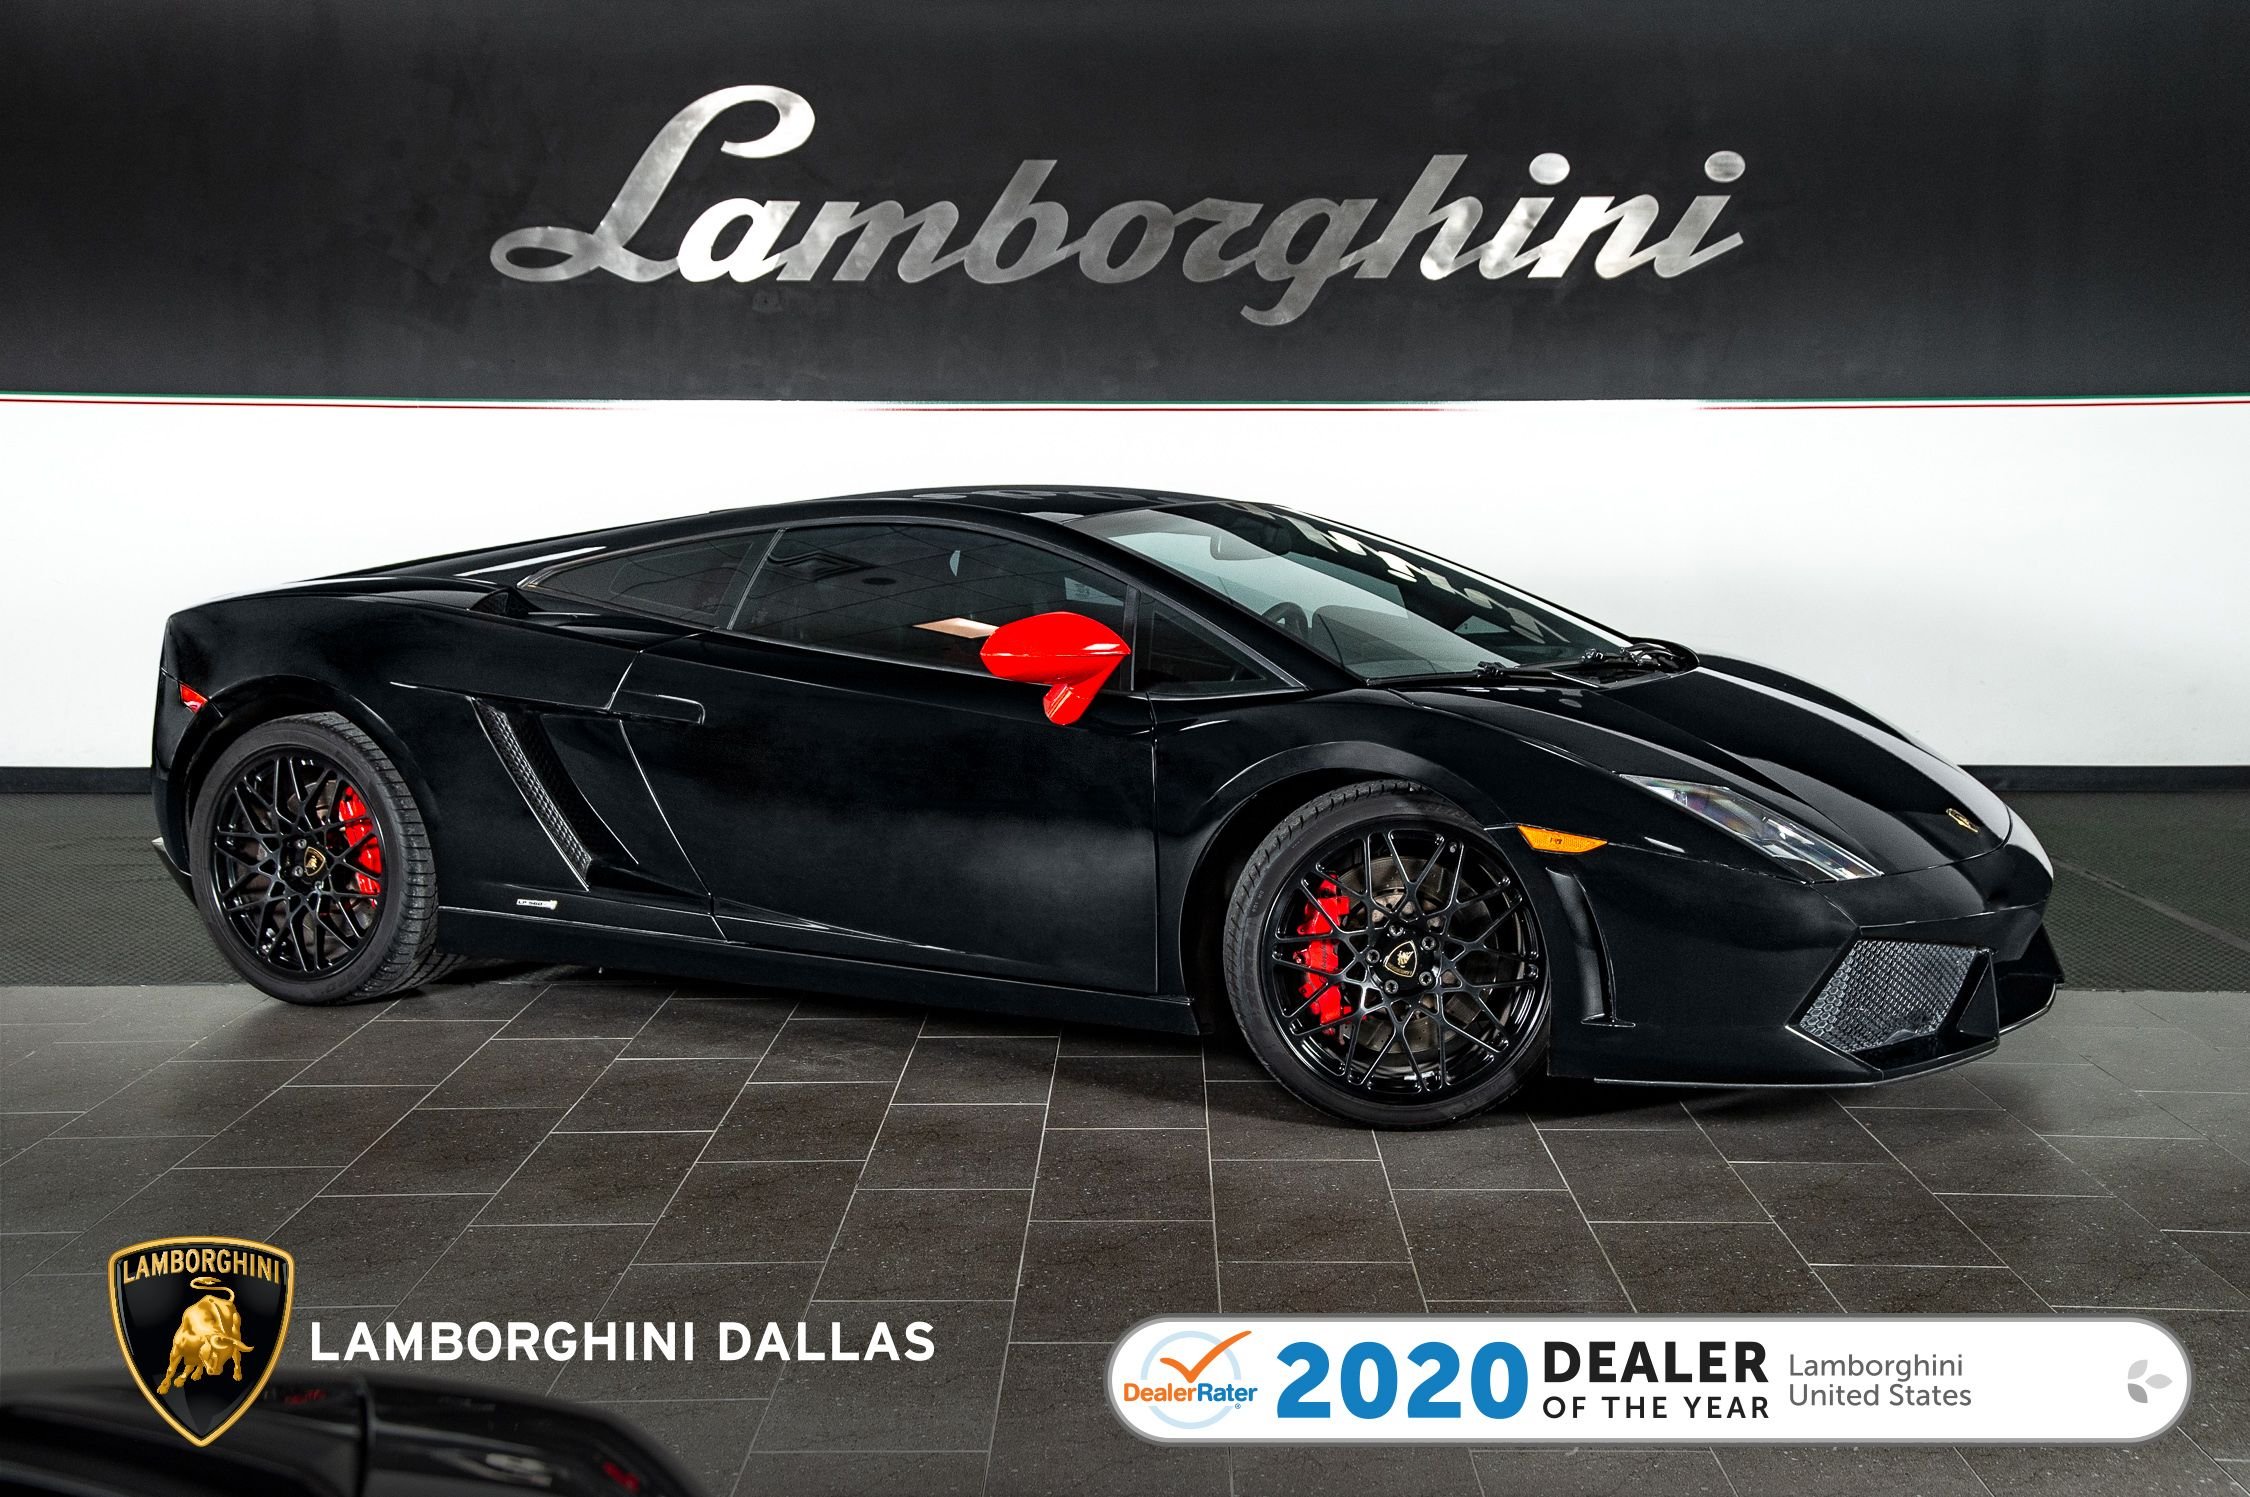 Used 2013 Lamborghini Gallardo For Sale at LAMBORGHINI 